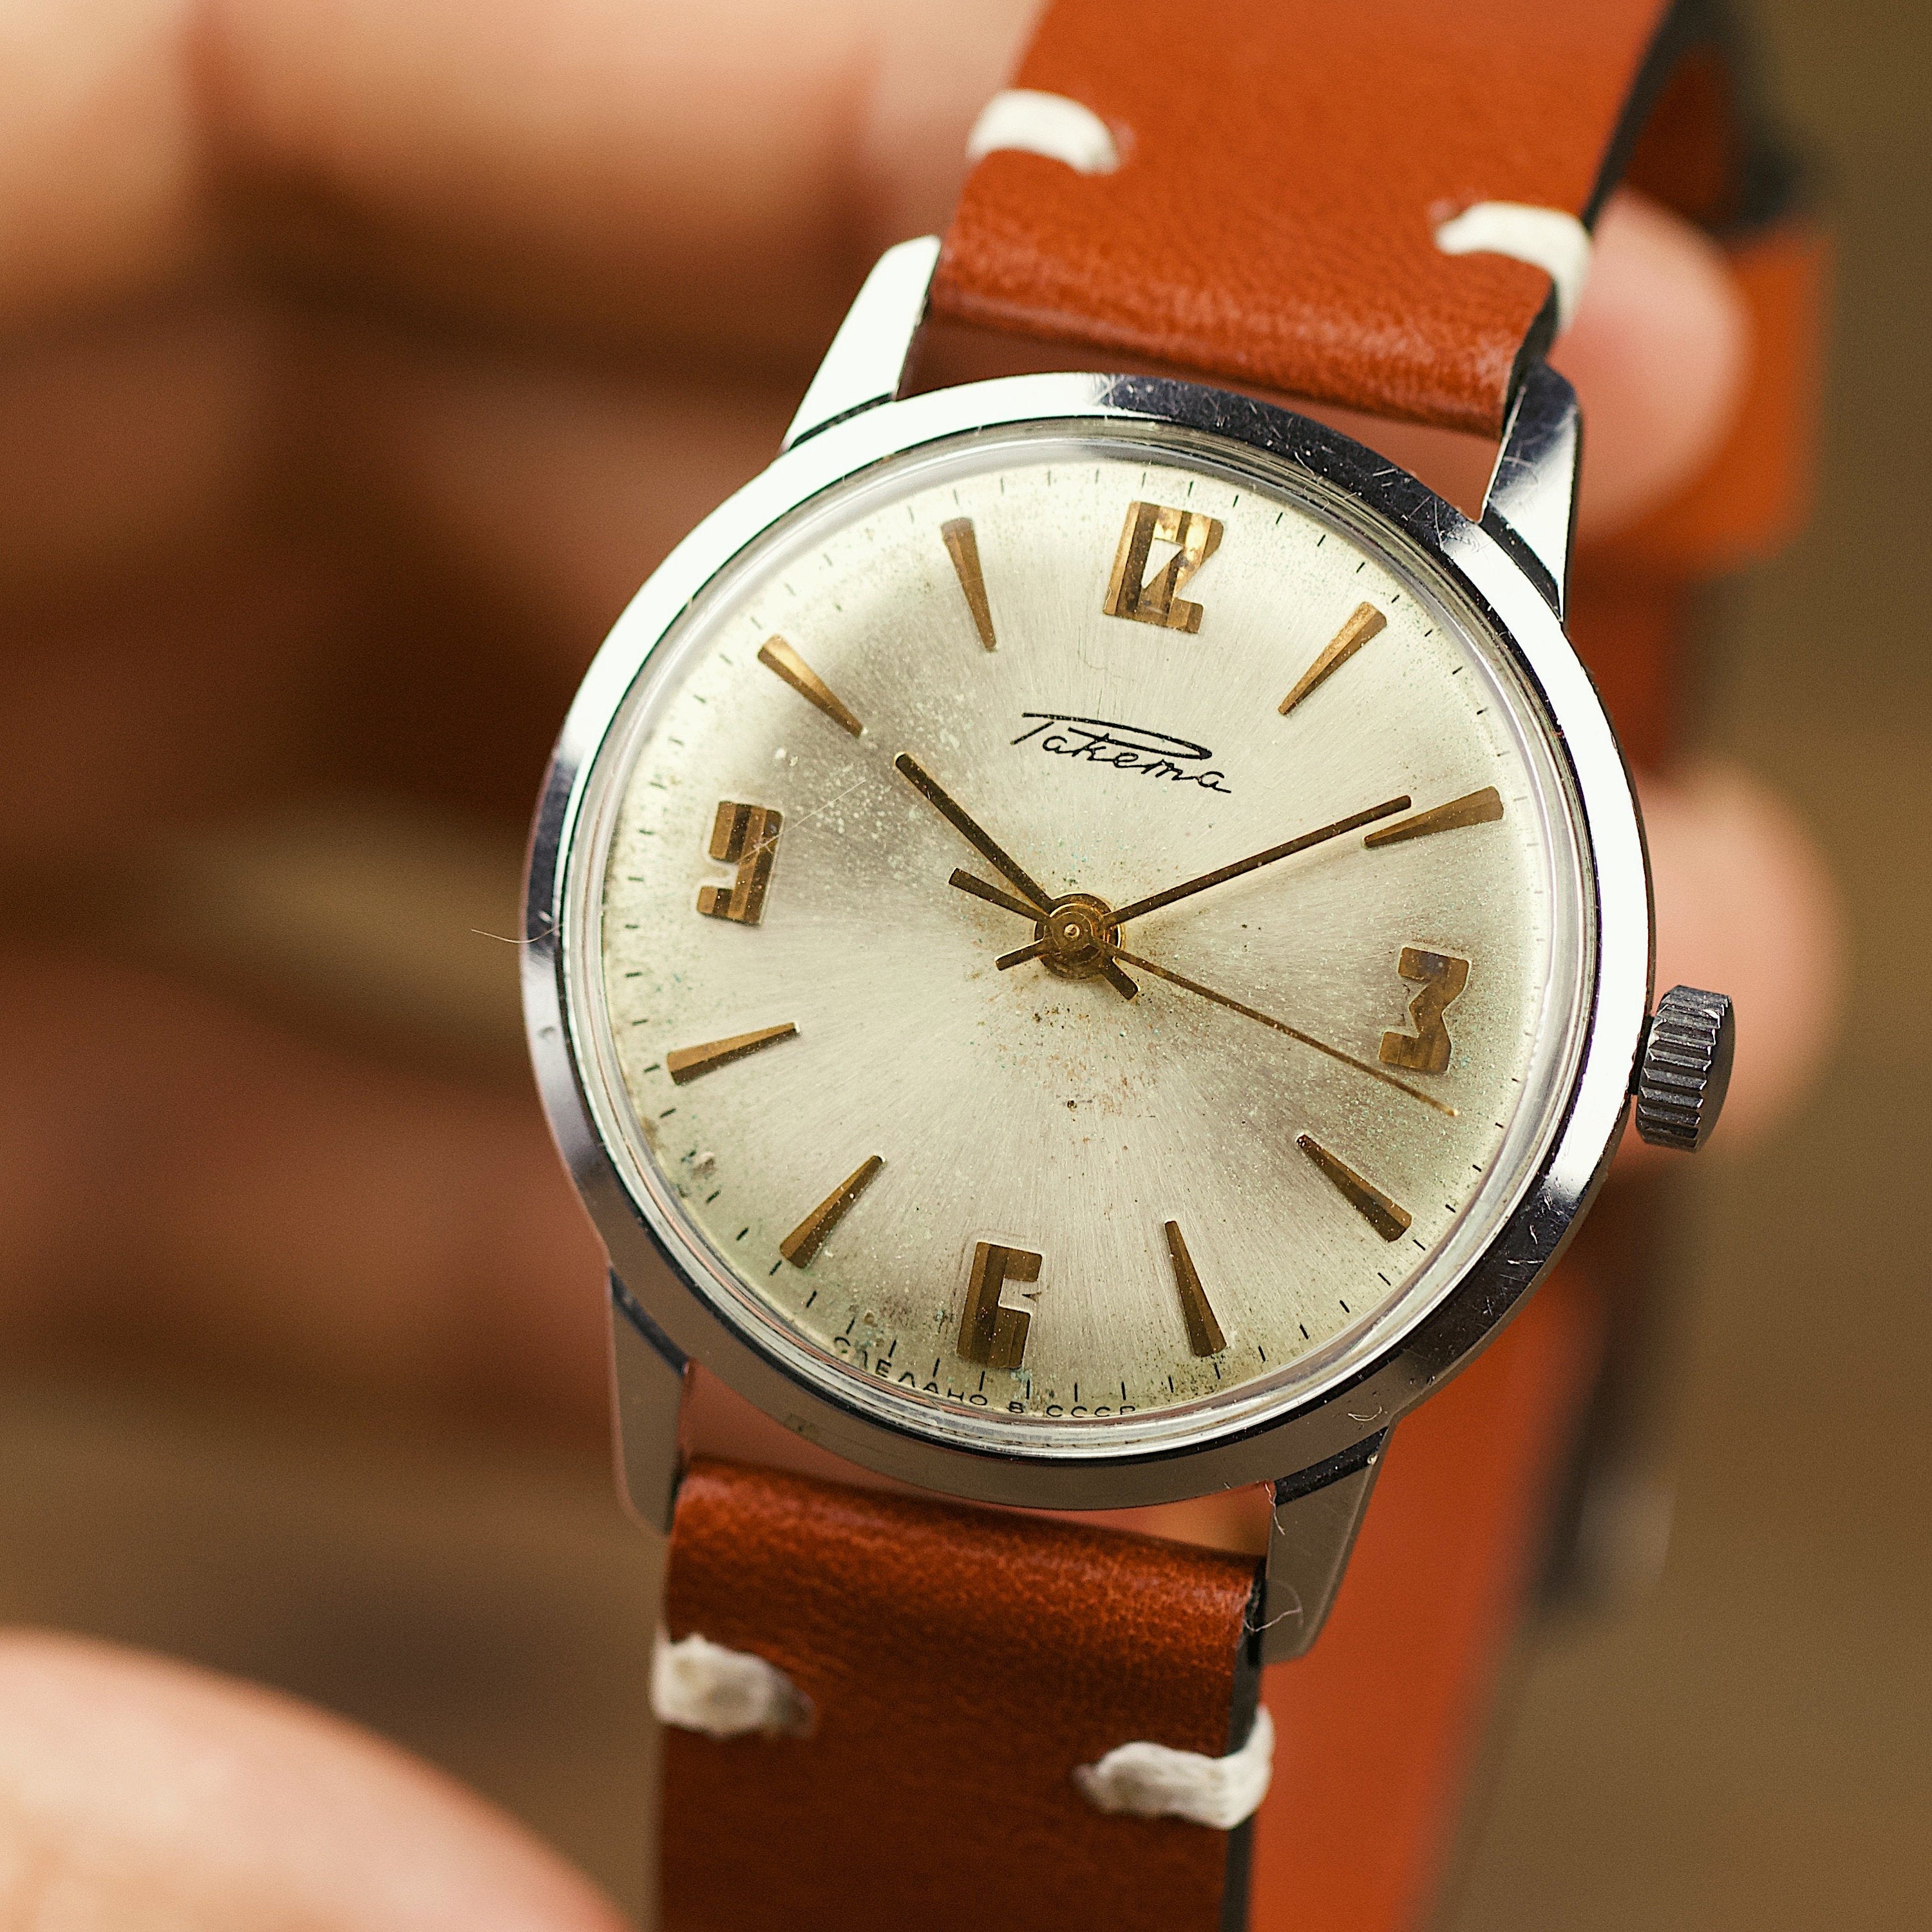 Original vintage watch Raketa. Soviet watch, watch for men, watch vintage, mens watch vintage, watch mechanical, retro watch